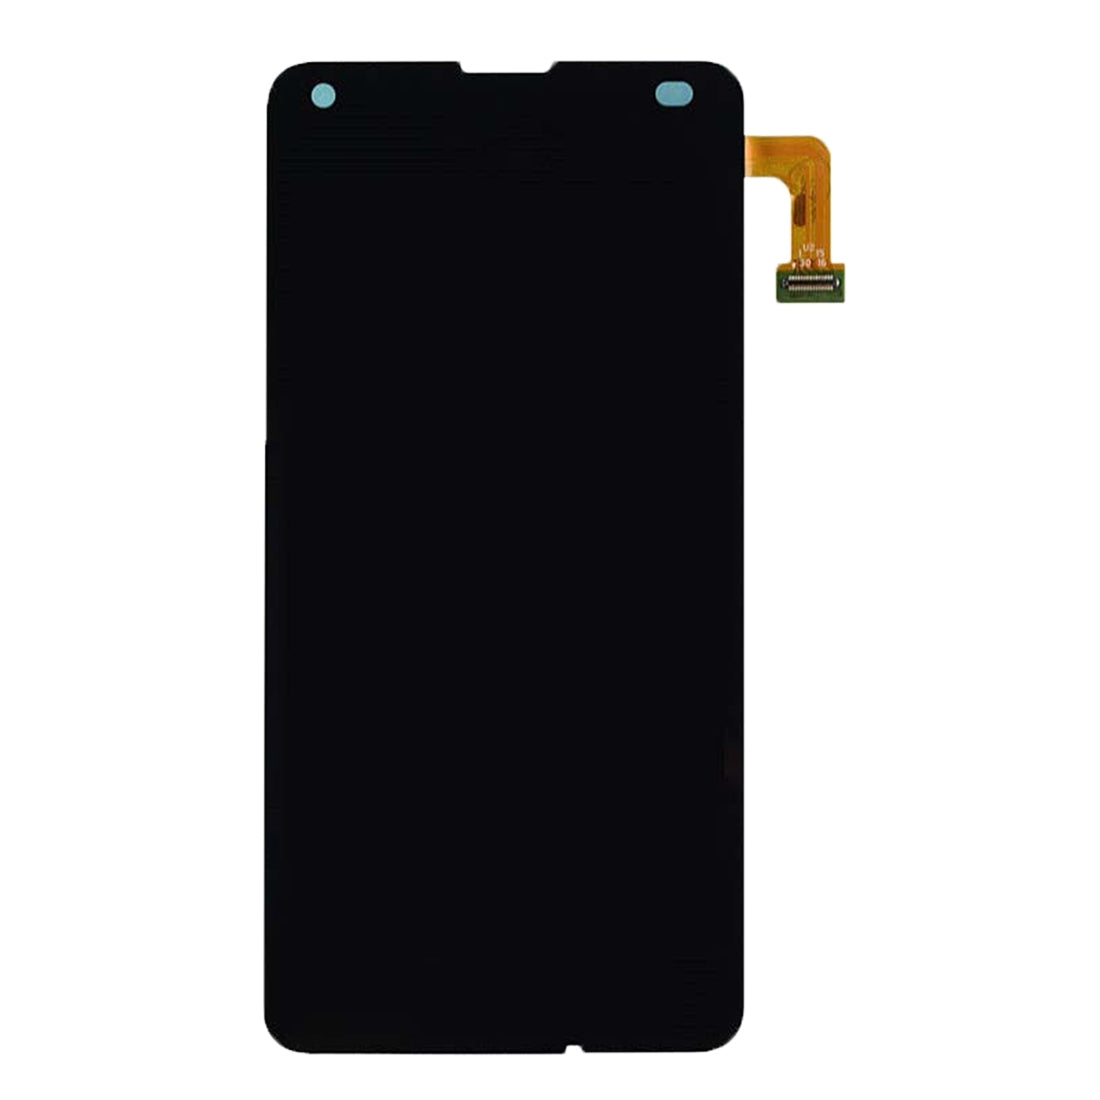 Pantalla LCD + Tactil Digitalizador Microsoft Lumia 550